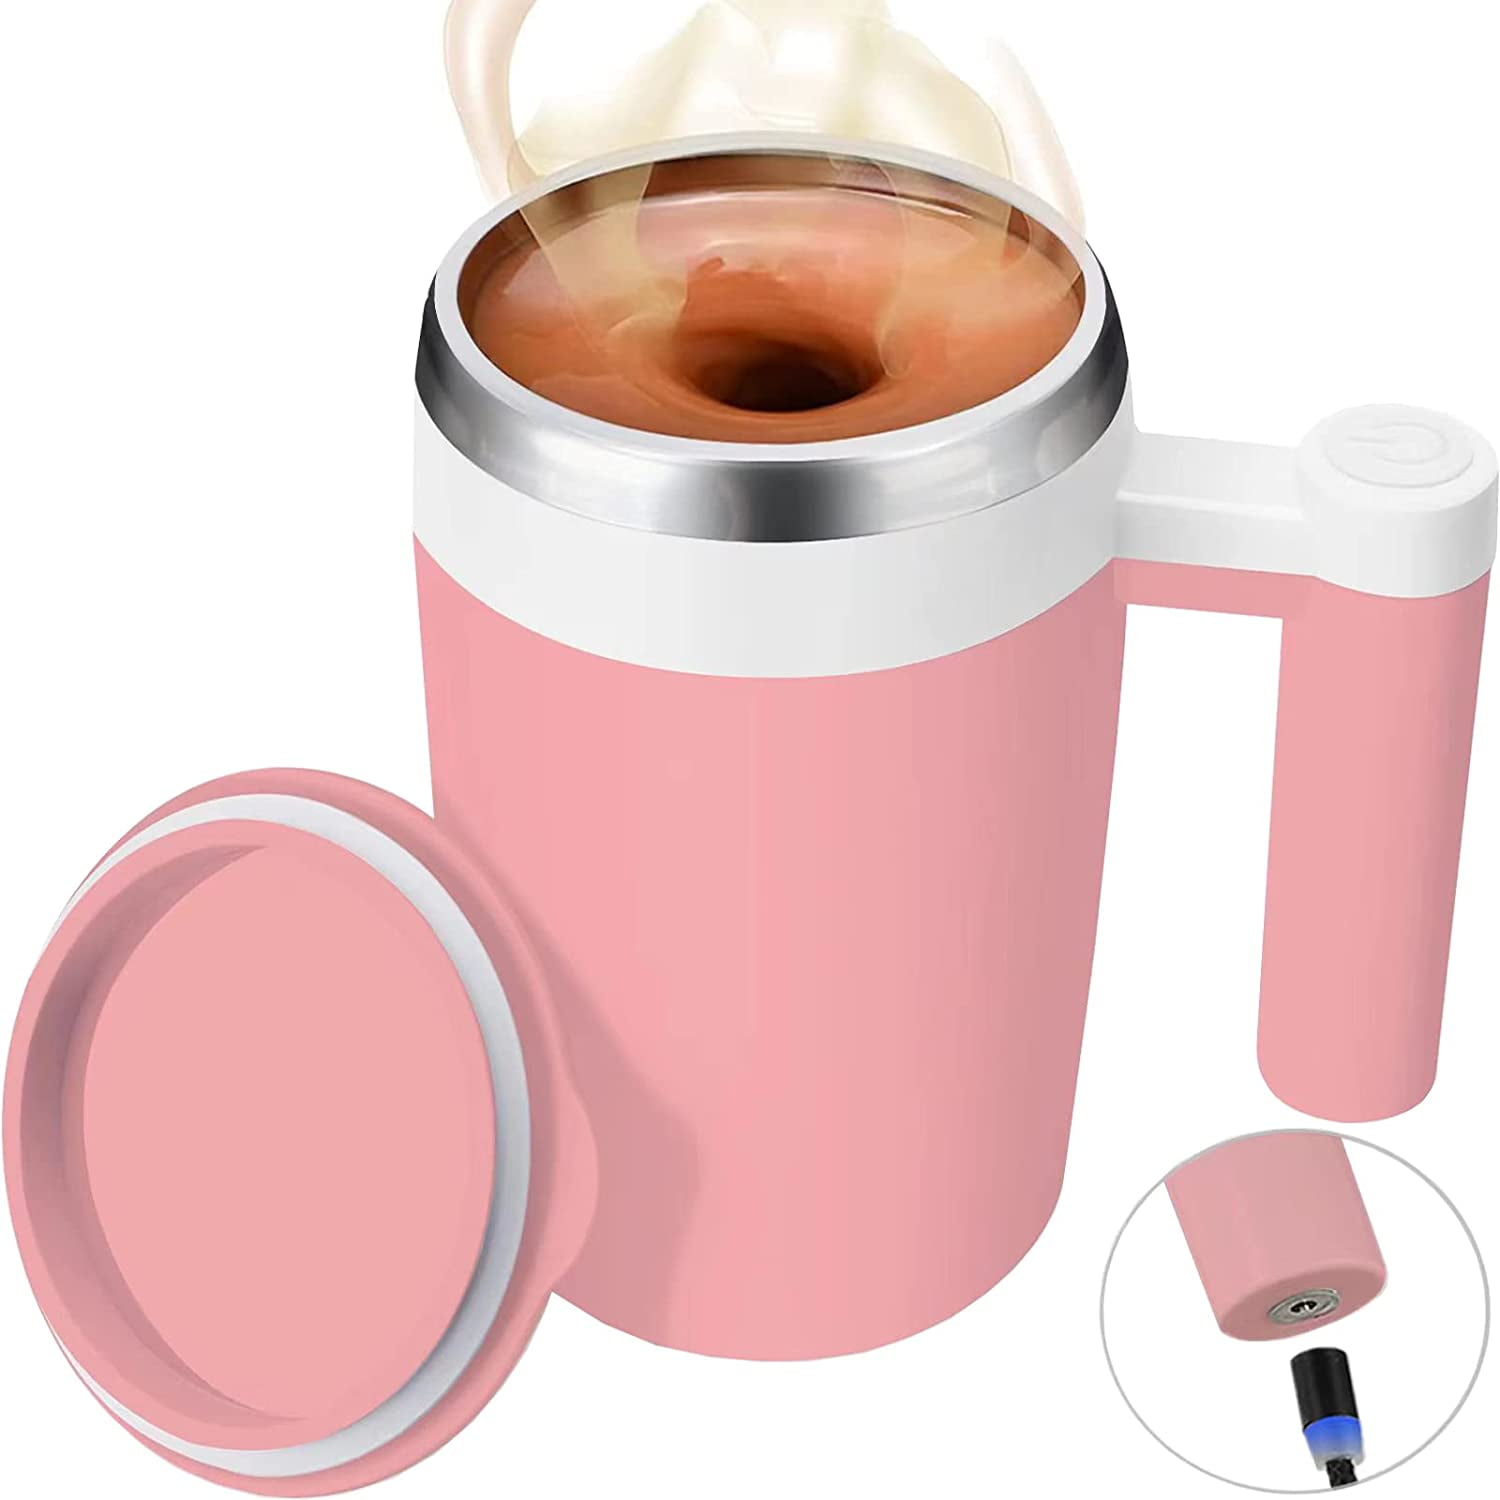 Self Stirring Coffee Mug, Self Mixing Coffee Mug,14Oz Stainless Steel  Insulated Reusable Coffee Cup,…See more Self Stirring Coffee Mug, Self  Mixing